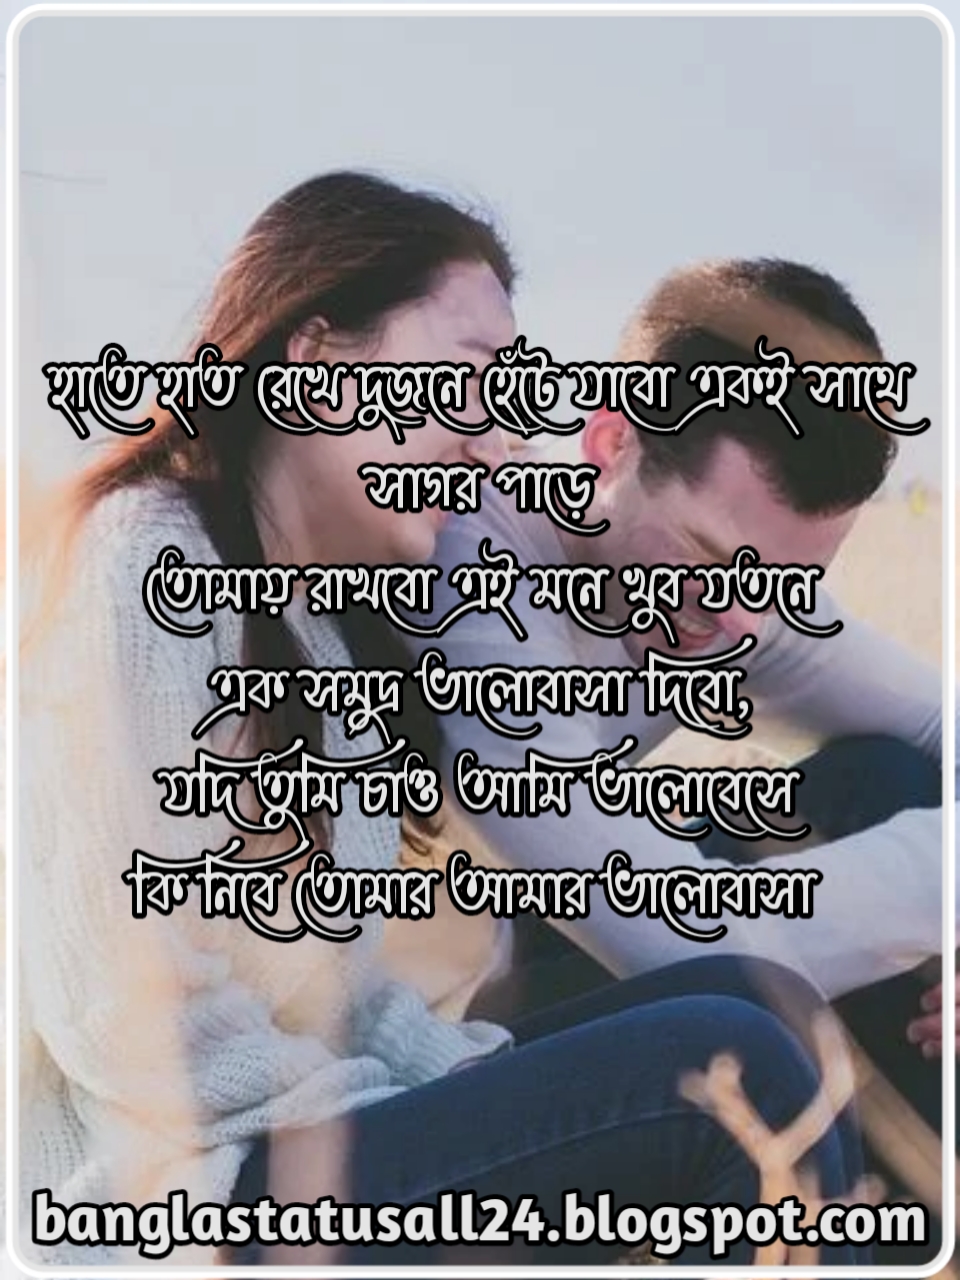 1. Bangla Love Sms, Bangla quotes Pic, Love status bangla, Love caption, Facebook caption bangla, bangla chondo pic, ছন্দ লেখা পিক, প্রেমের ছন্দ, Bangla Status Picture